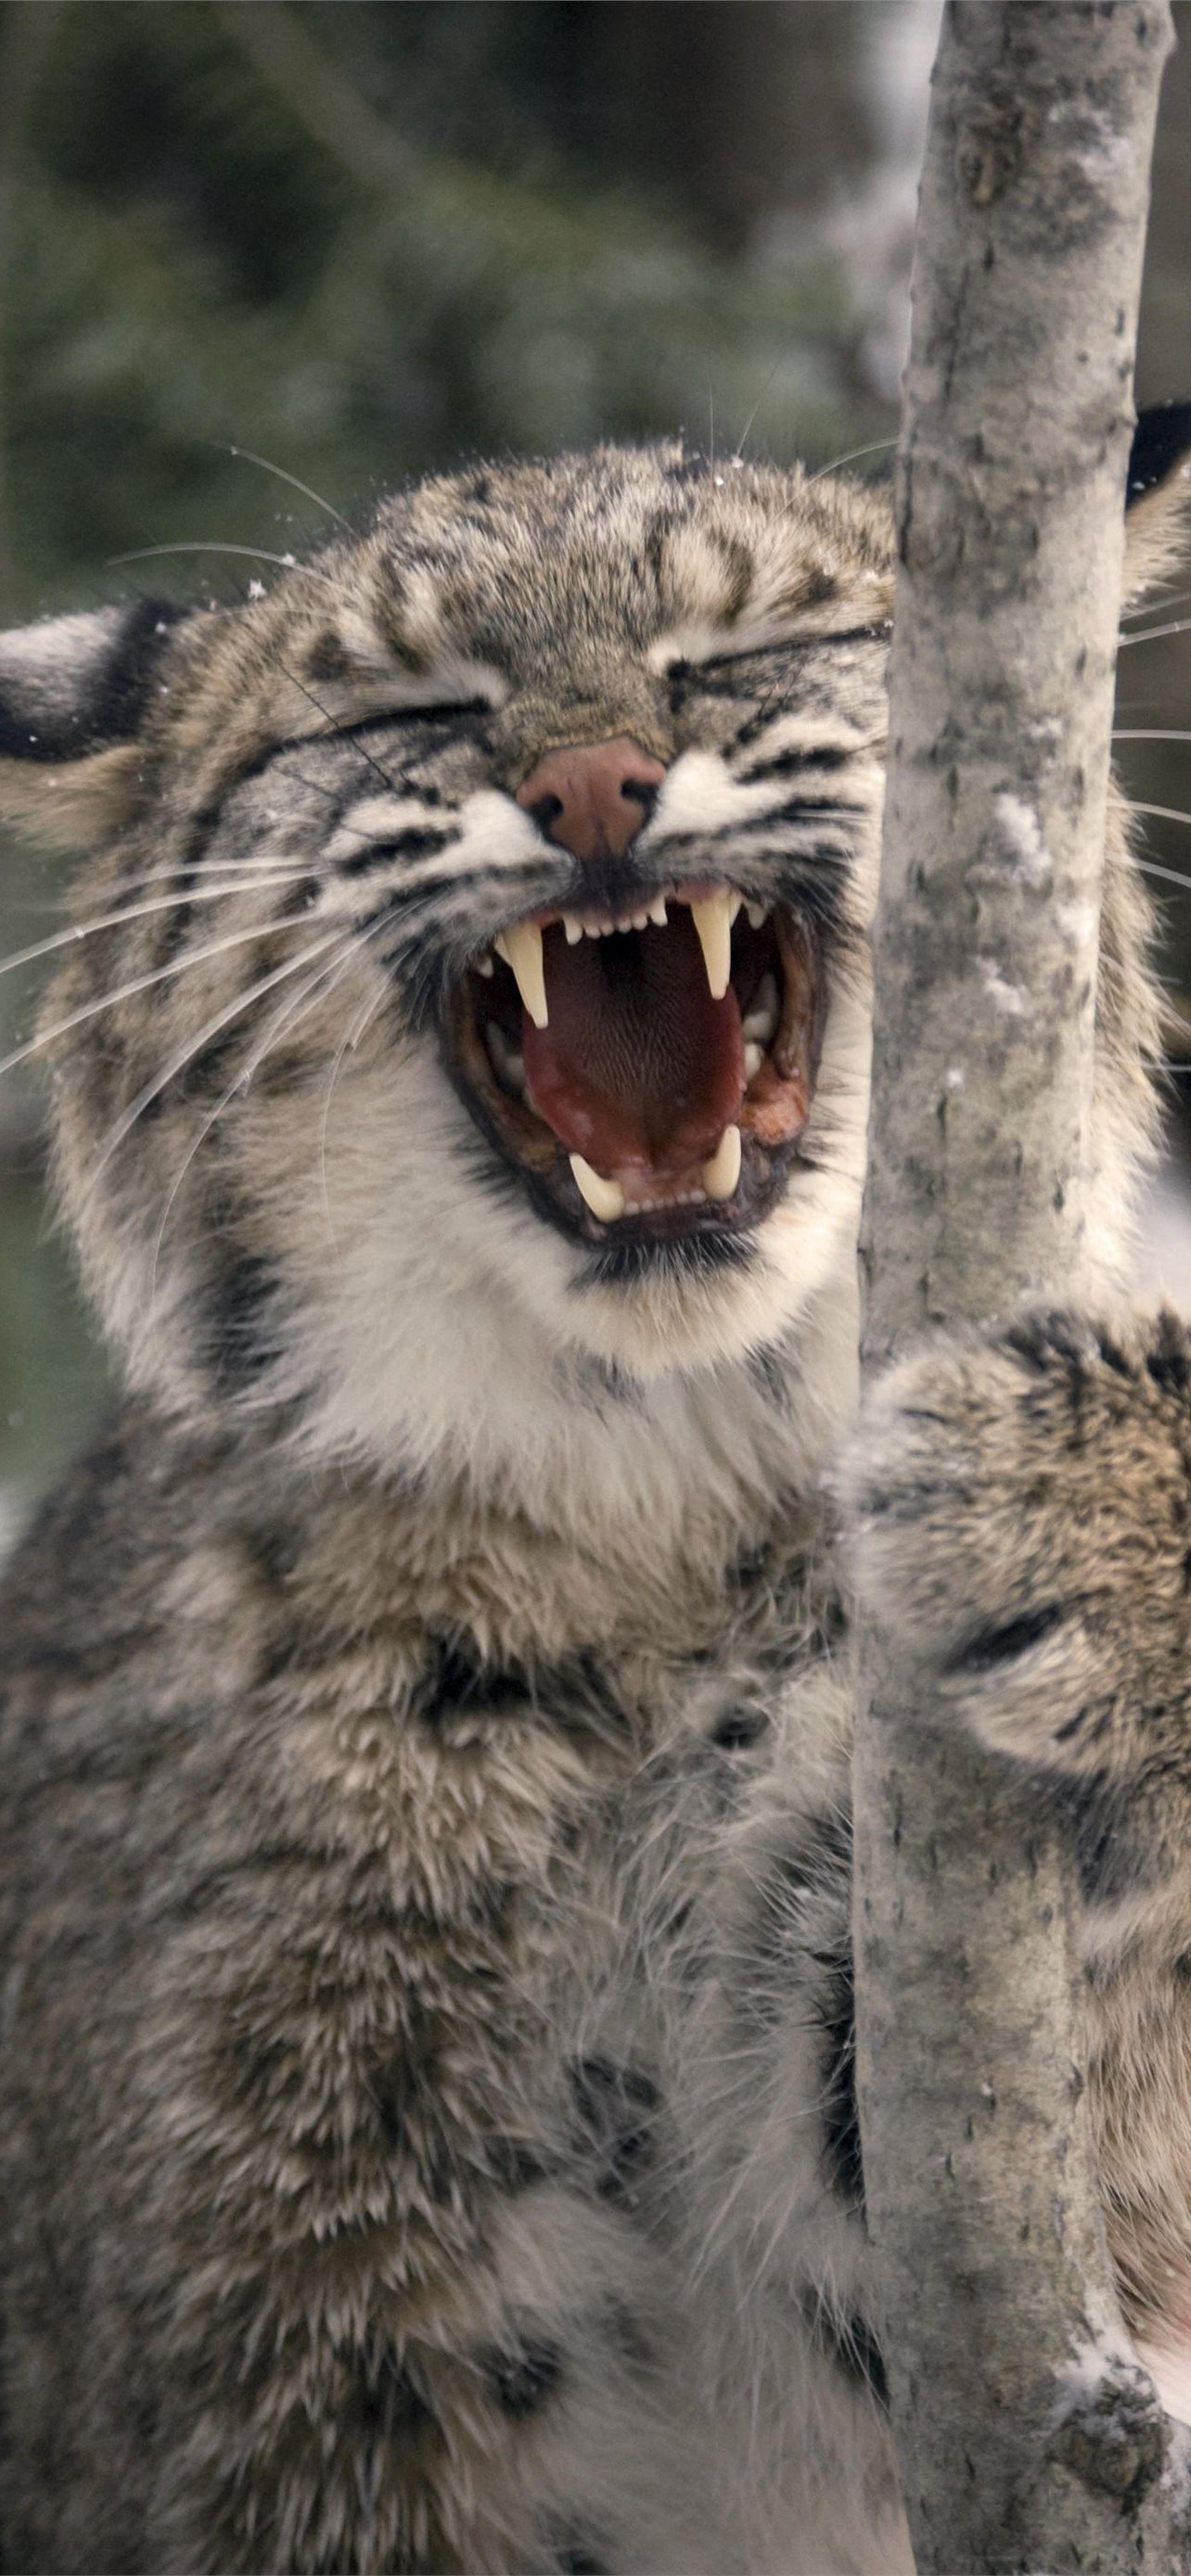 Download wallpaper 800x1200 bobcat lynx predator snow iphone 4s4 for  parallax hd background